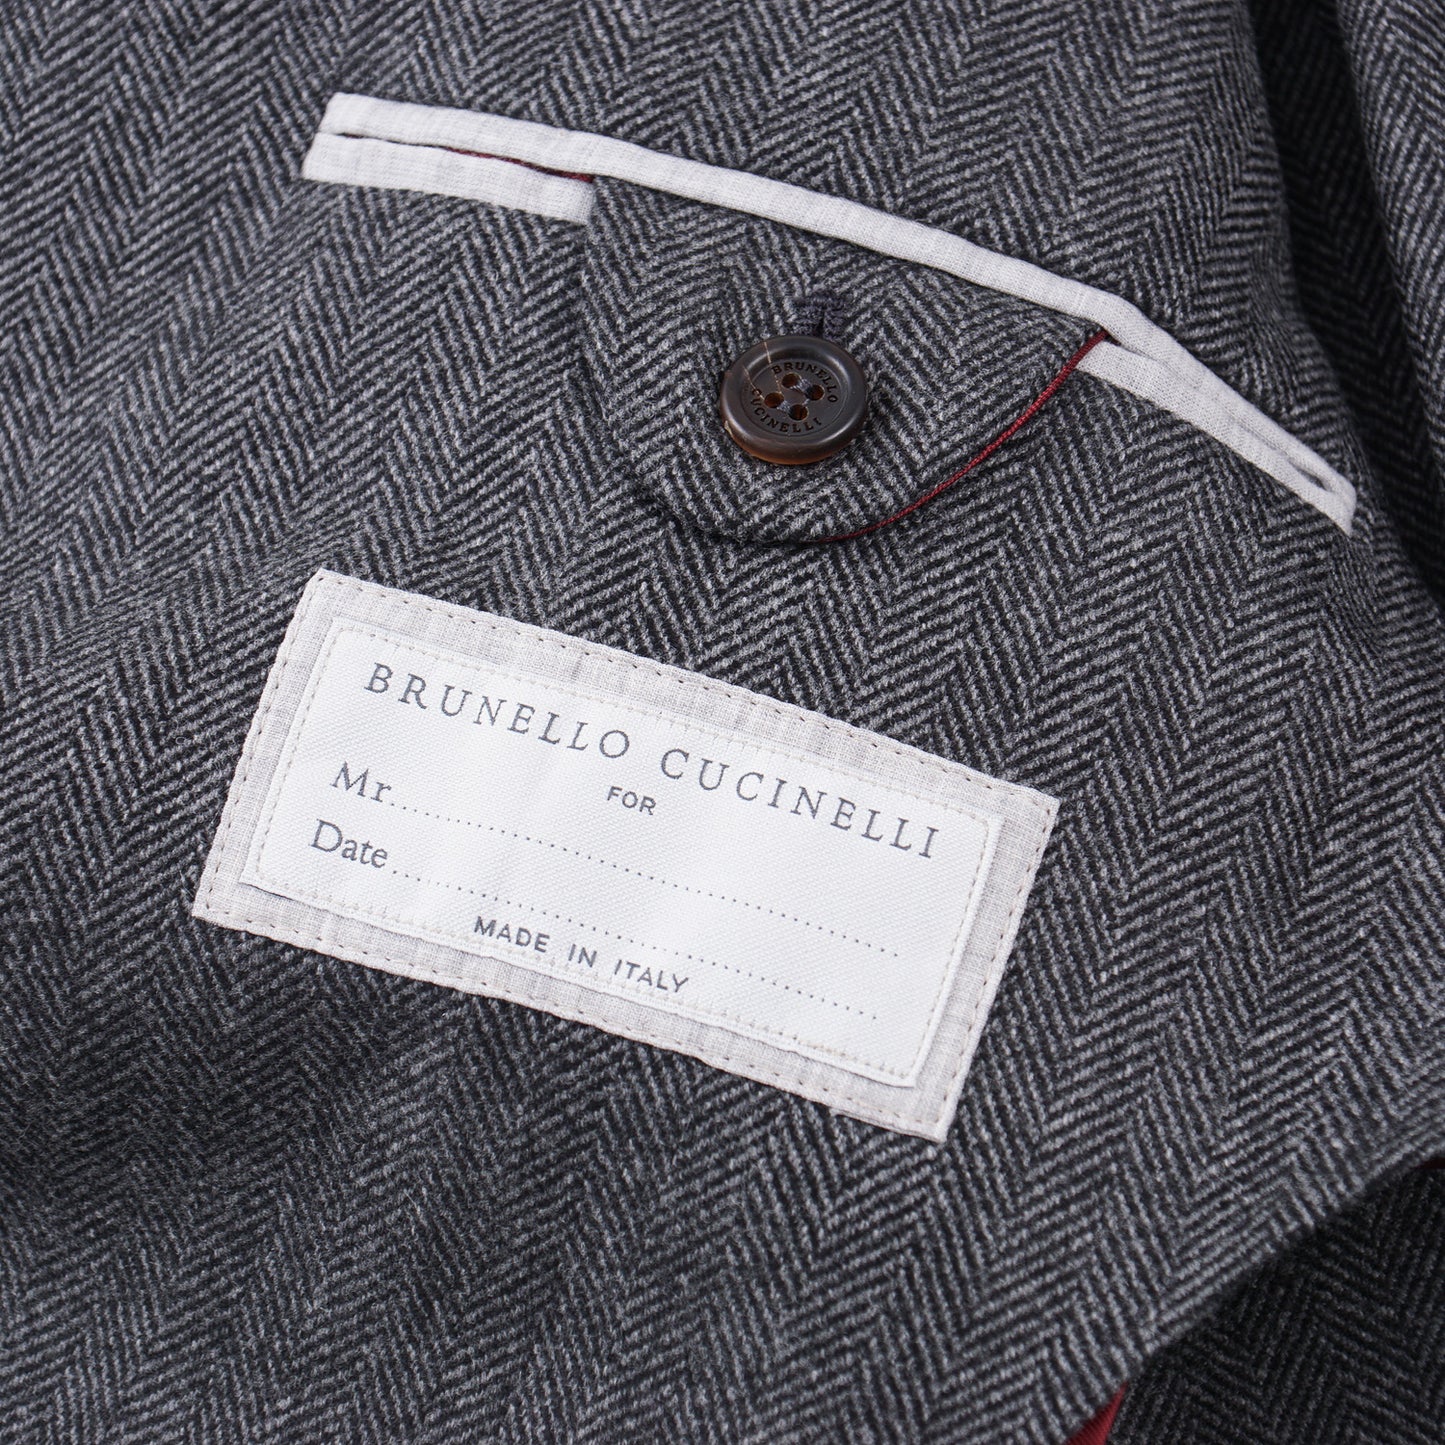 Brunello Cucinelli Soft-Constructed Blazer - Top Shelf Apparel